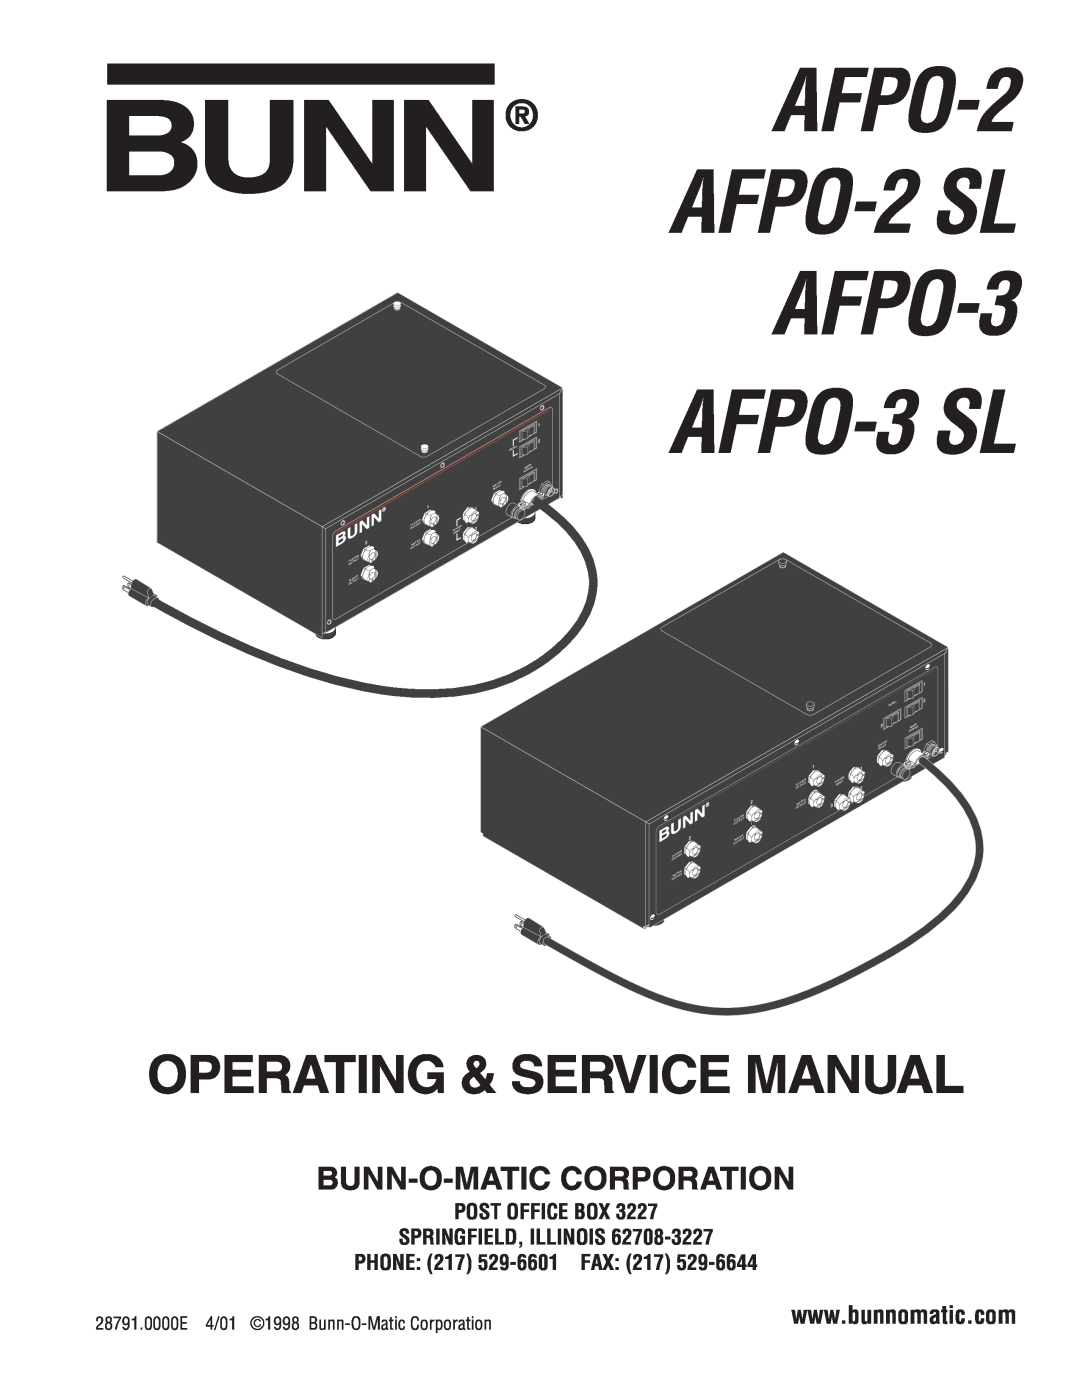 Bunn AFPO-2 SL service manual Bunn-O-Matic Corporation, POST OFFICE BOX SPRINGFIELD, ILLINOIS PHONE 217 529-6601 FAX 